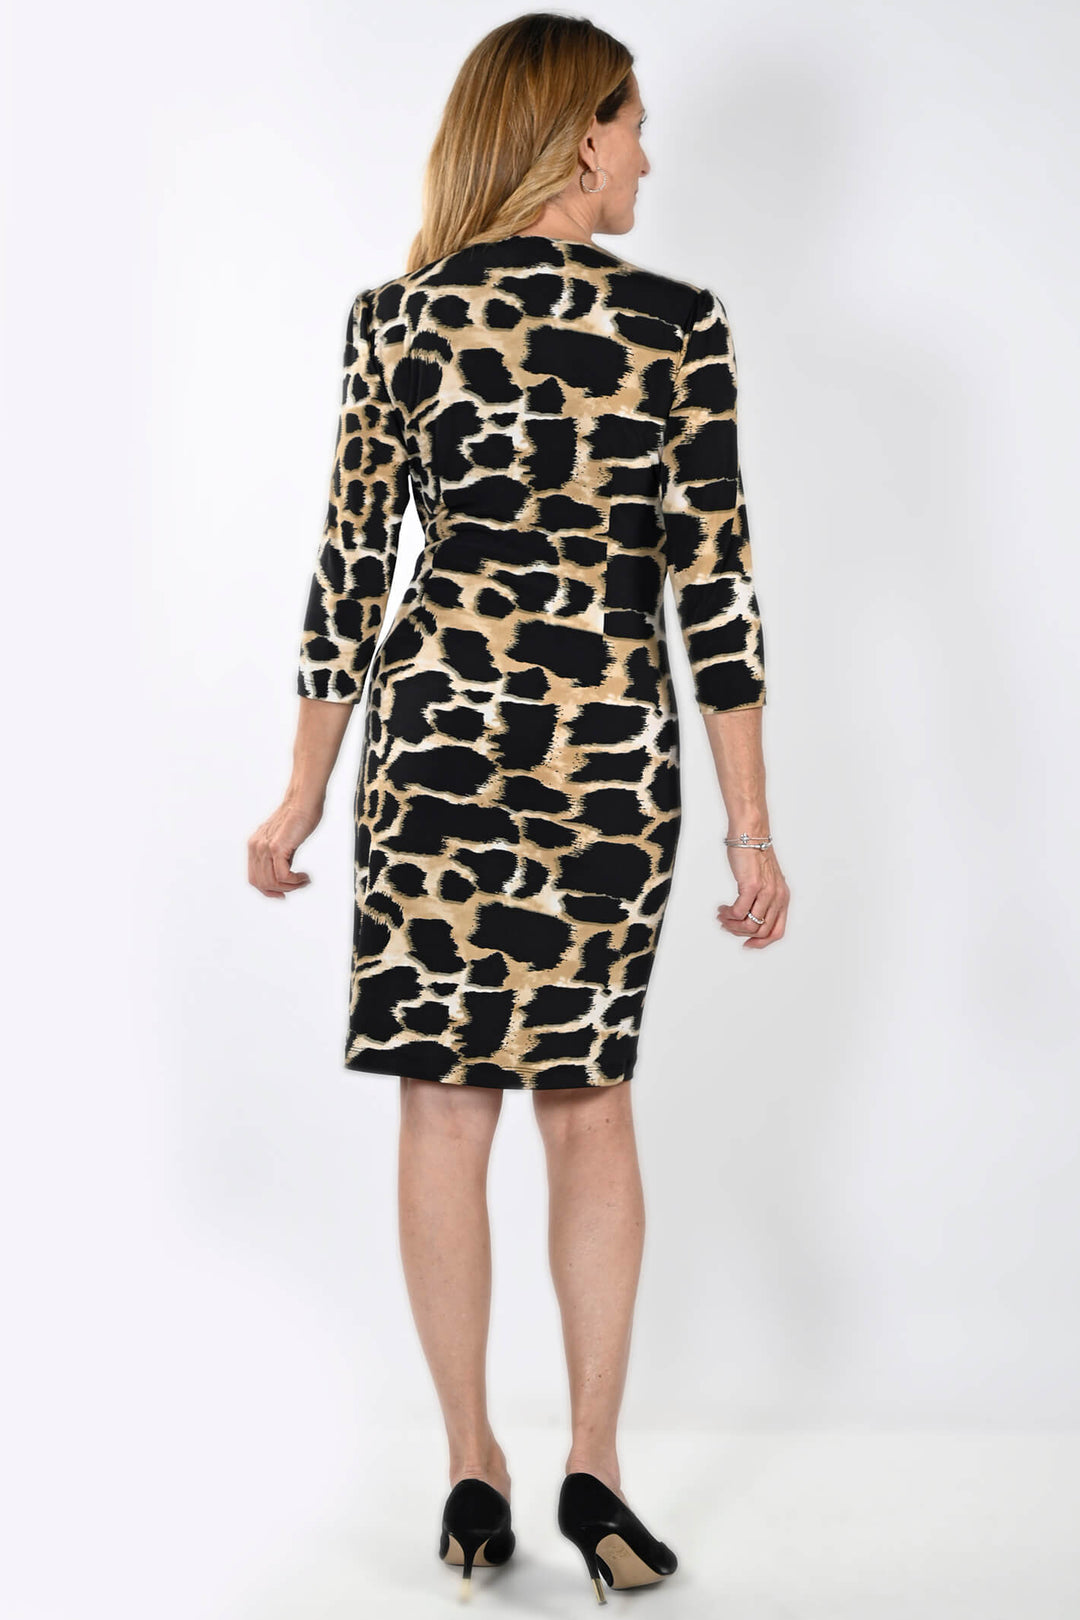 Frank Lyman 233129 Black Beige Animal Print Wrap Top Dress - Dotique